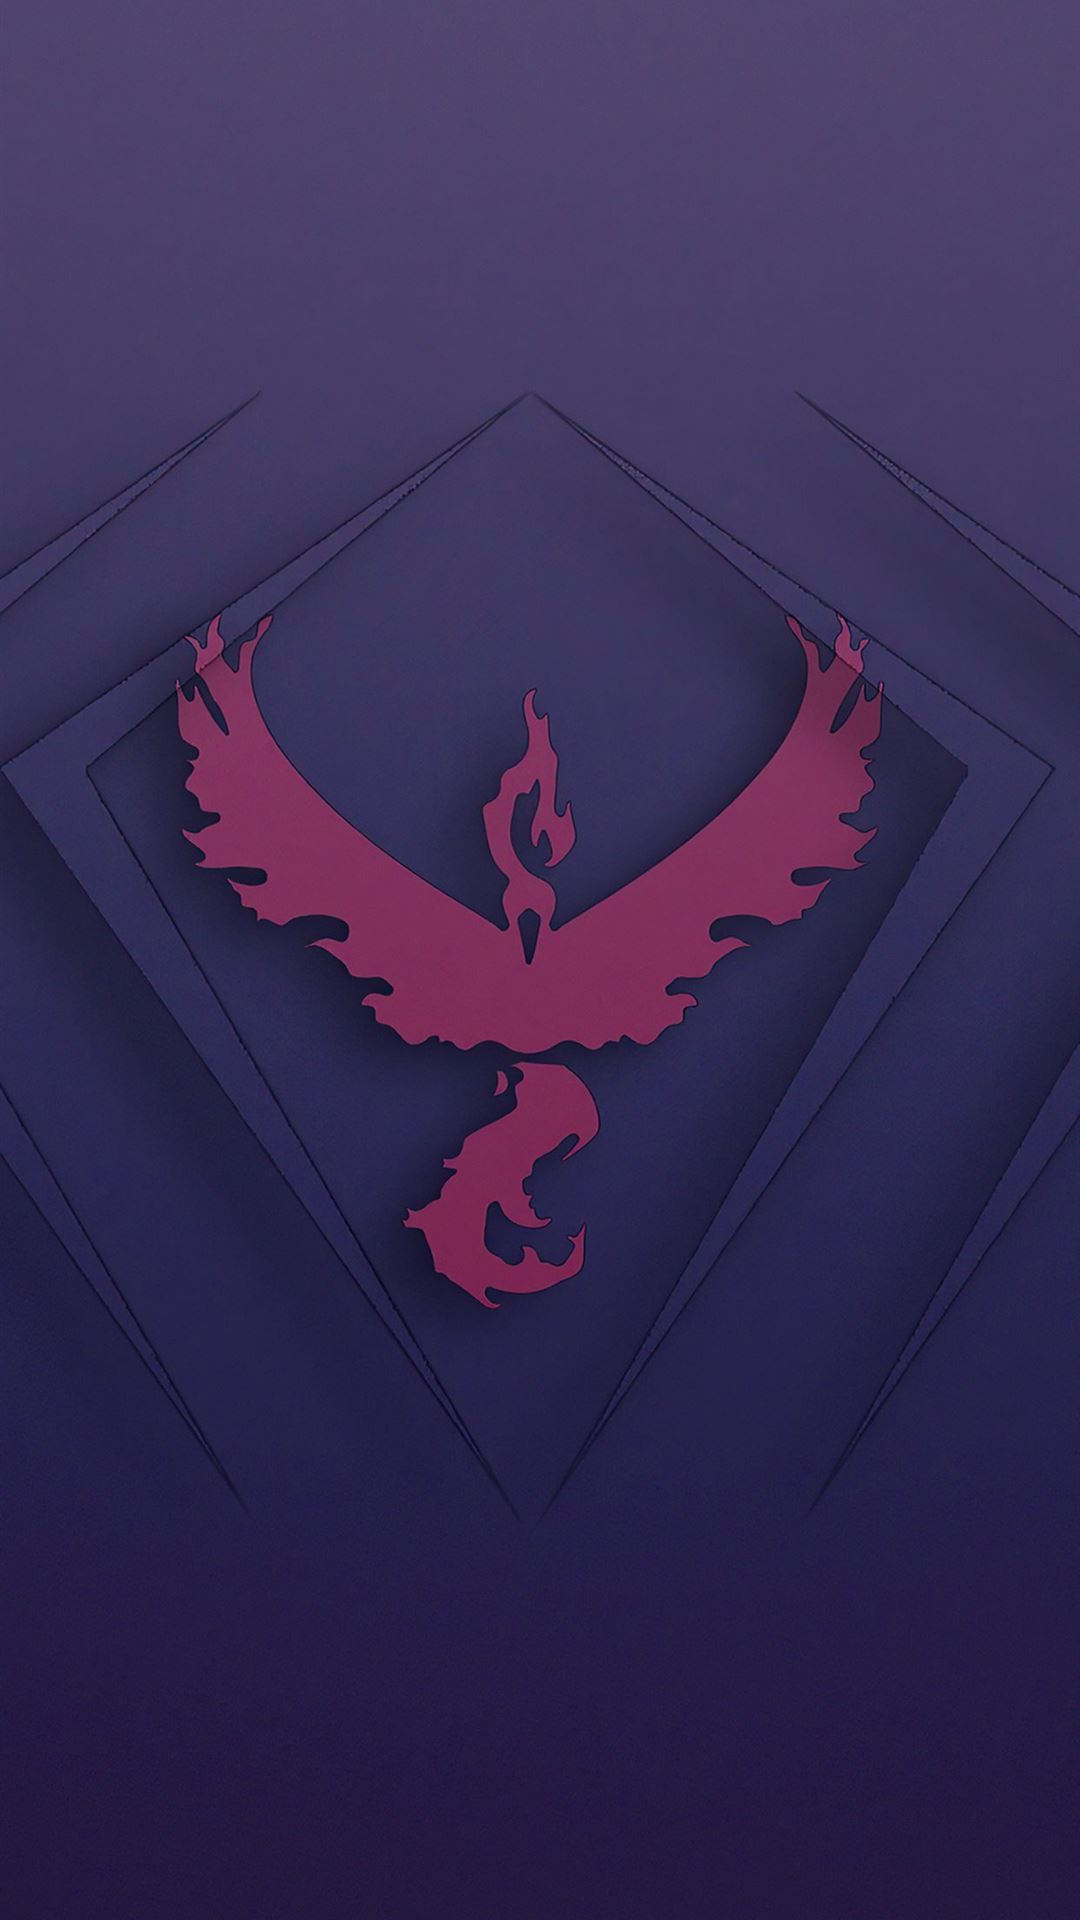 phoenix pokemon logo 4k iPhone 8 Wallpaper Free Download